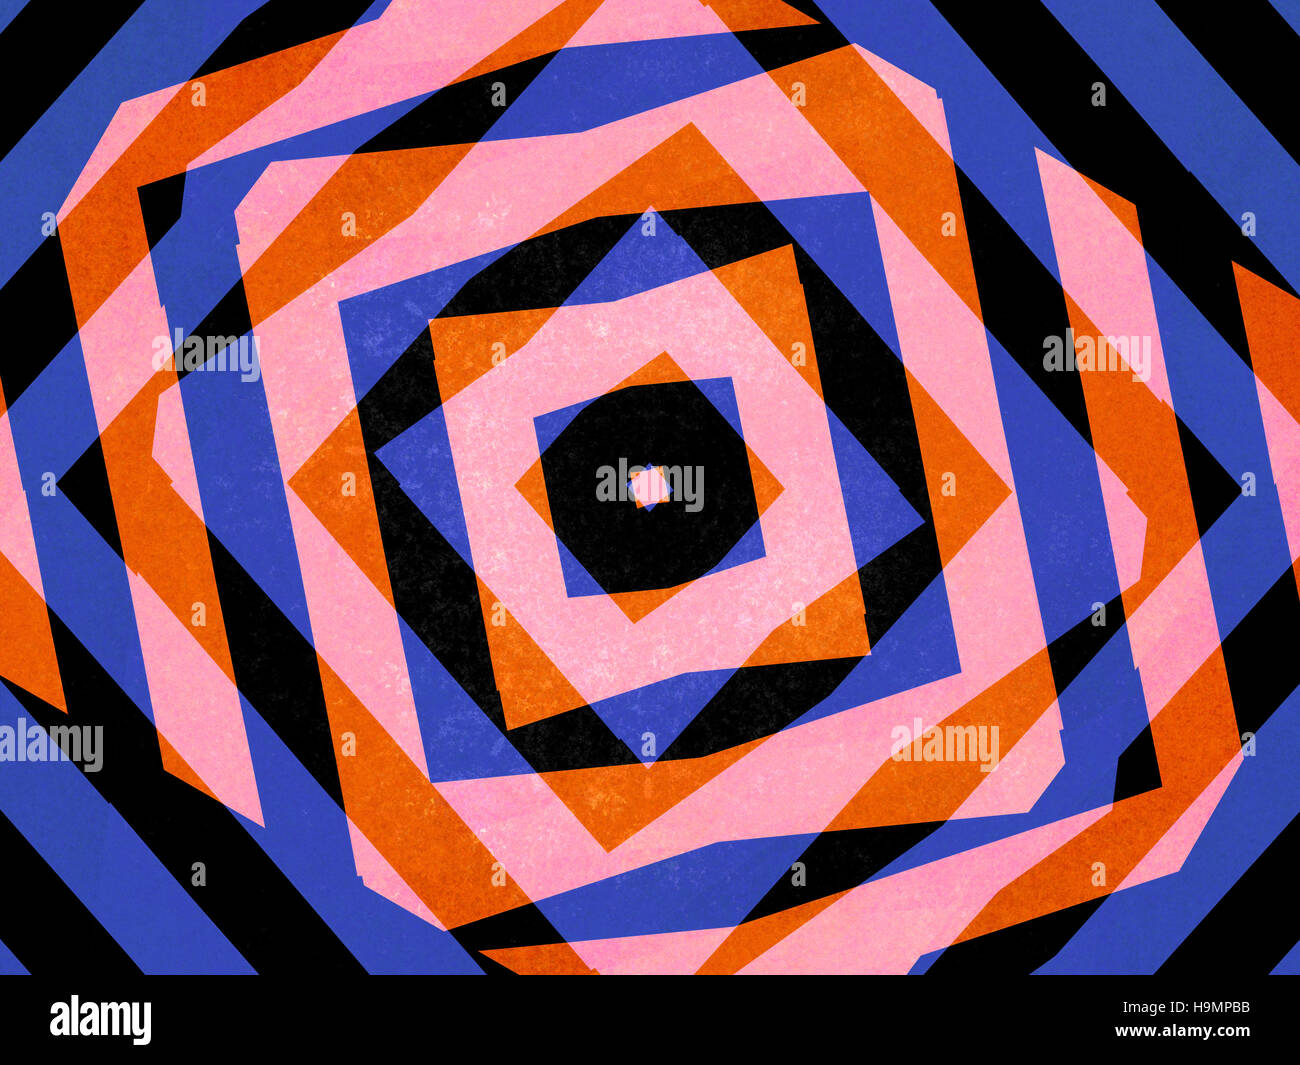 Retro blue and orange striped diamond pattern background Stock Photo